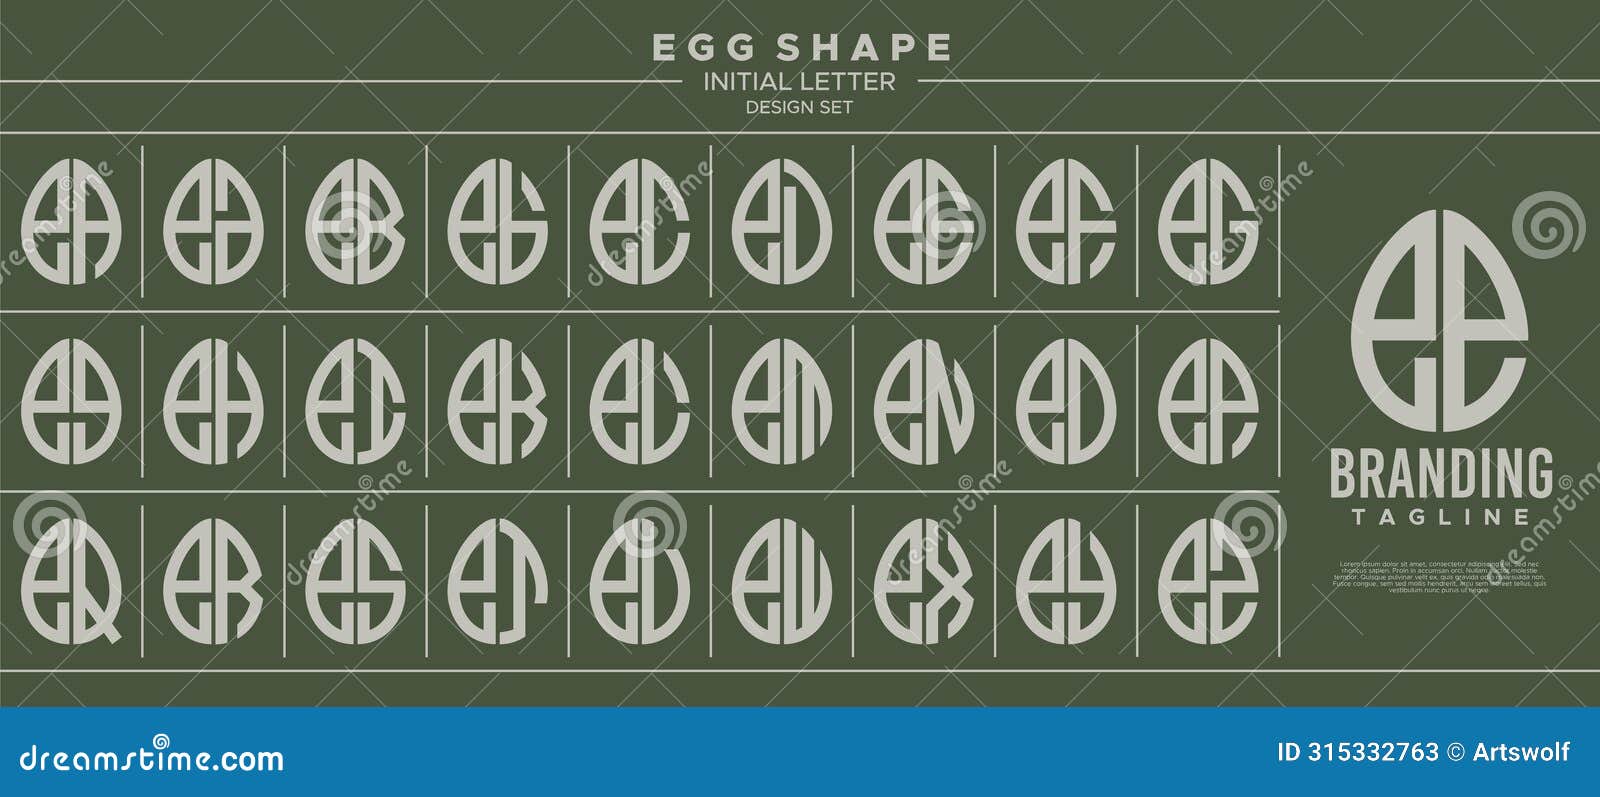 set of food egg  lowercase letter e ee logo 